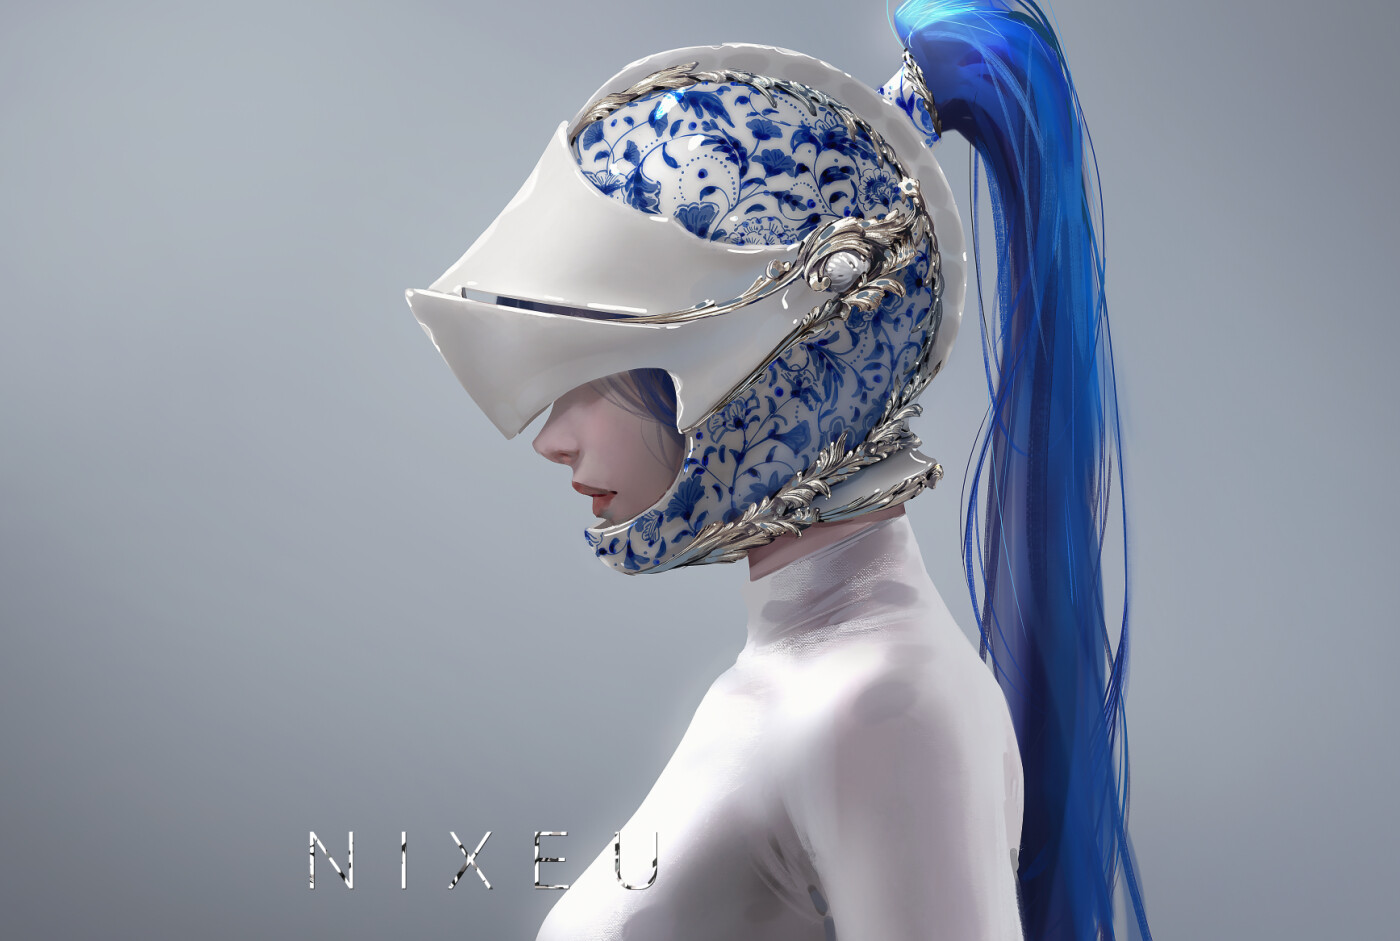 General 1400x941 Nixeu drawing women helmet profile ponytail blue hair pattern simple background Gzhel